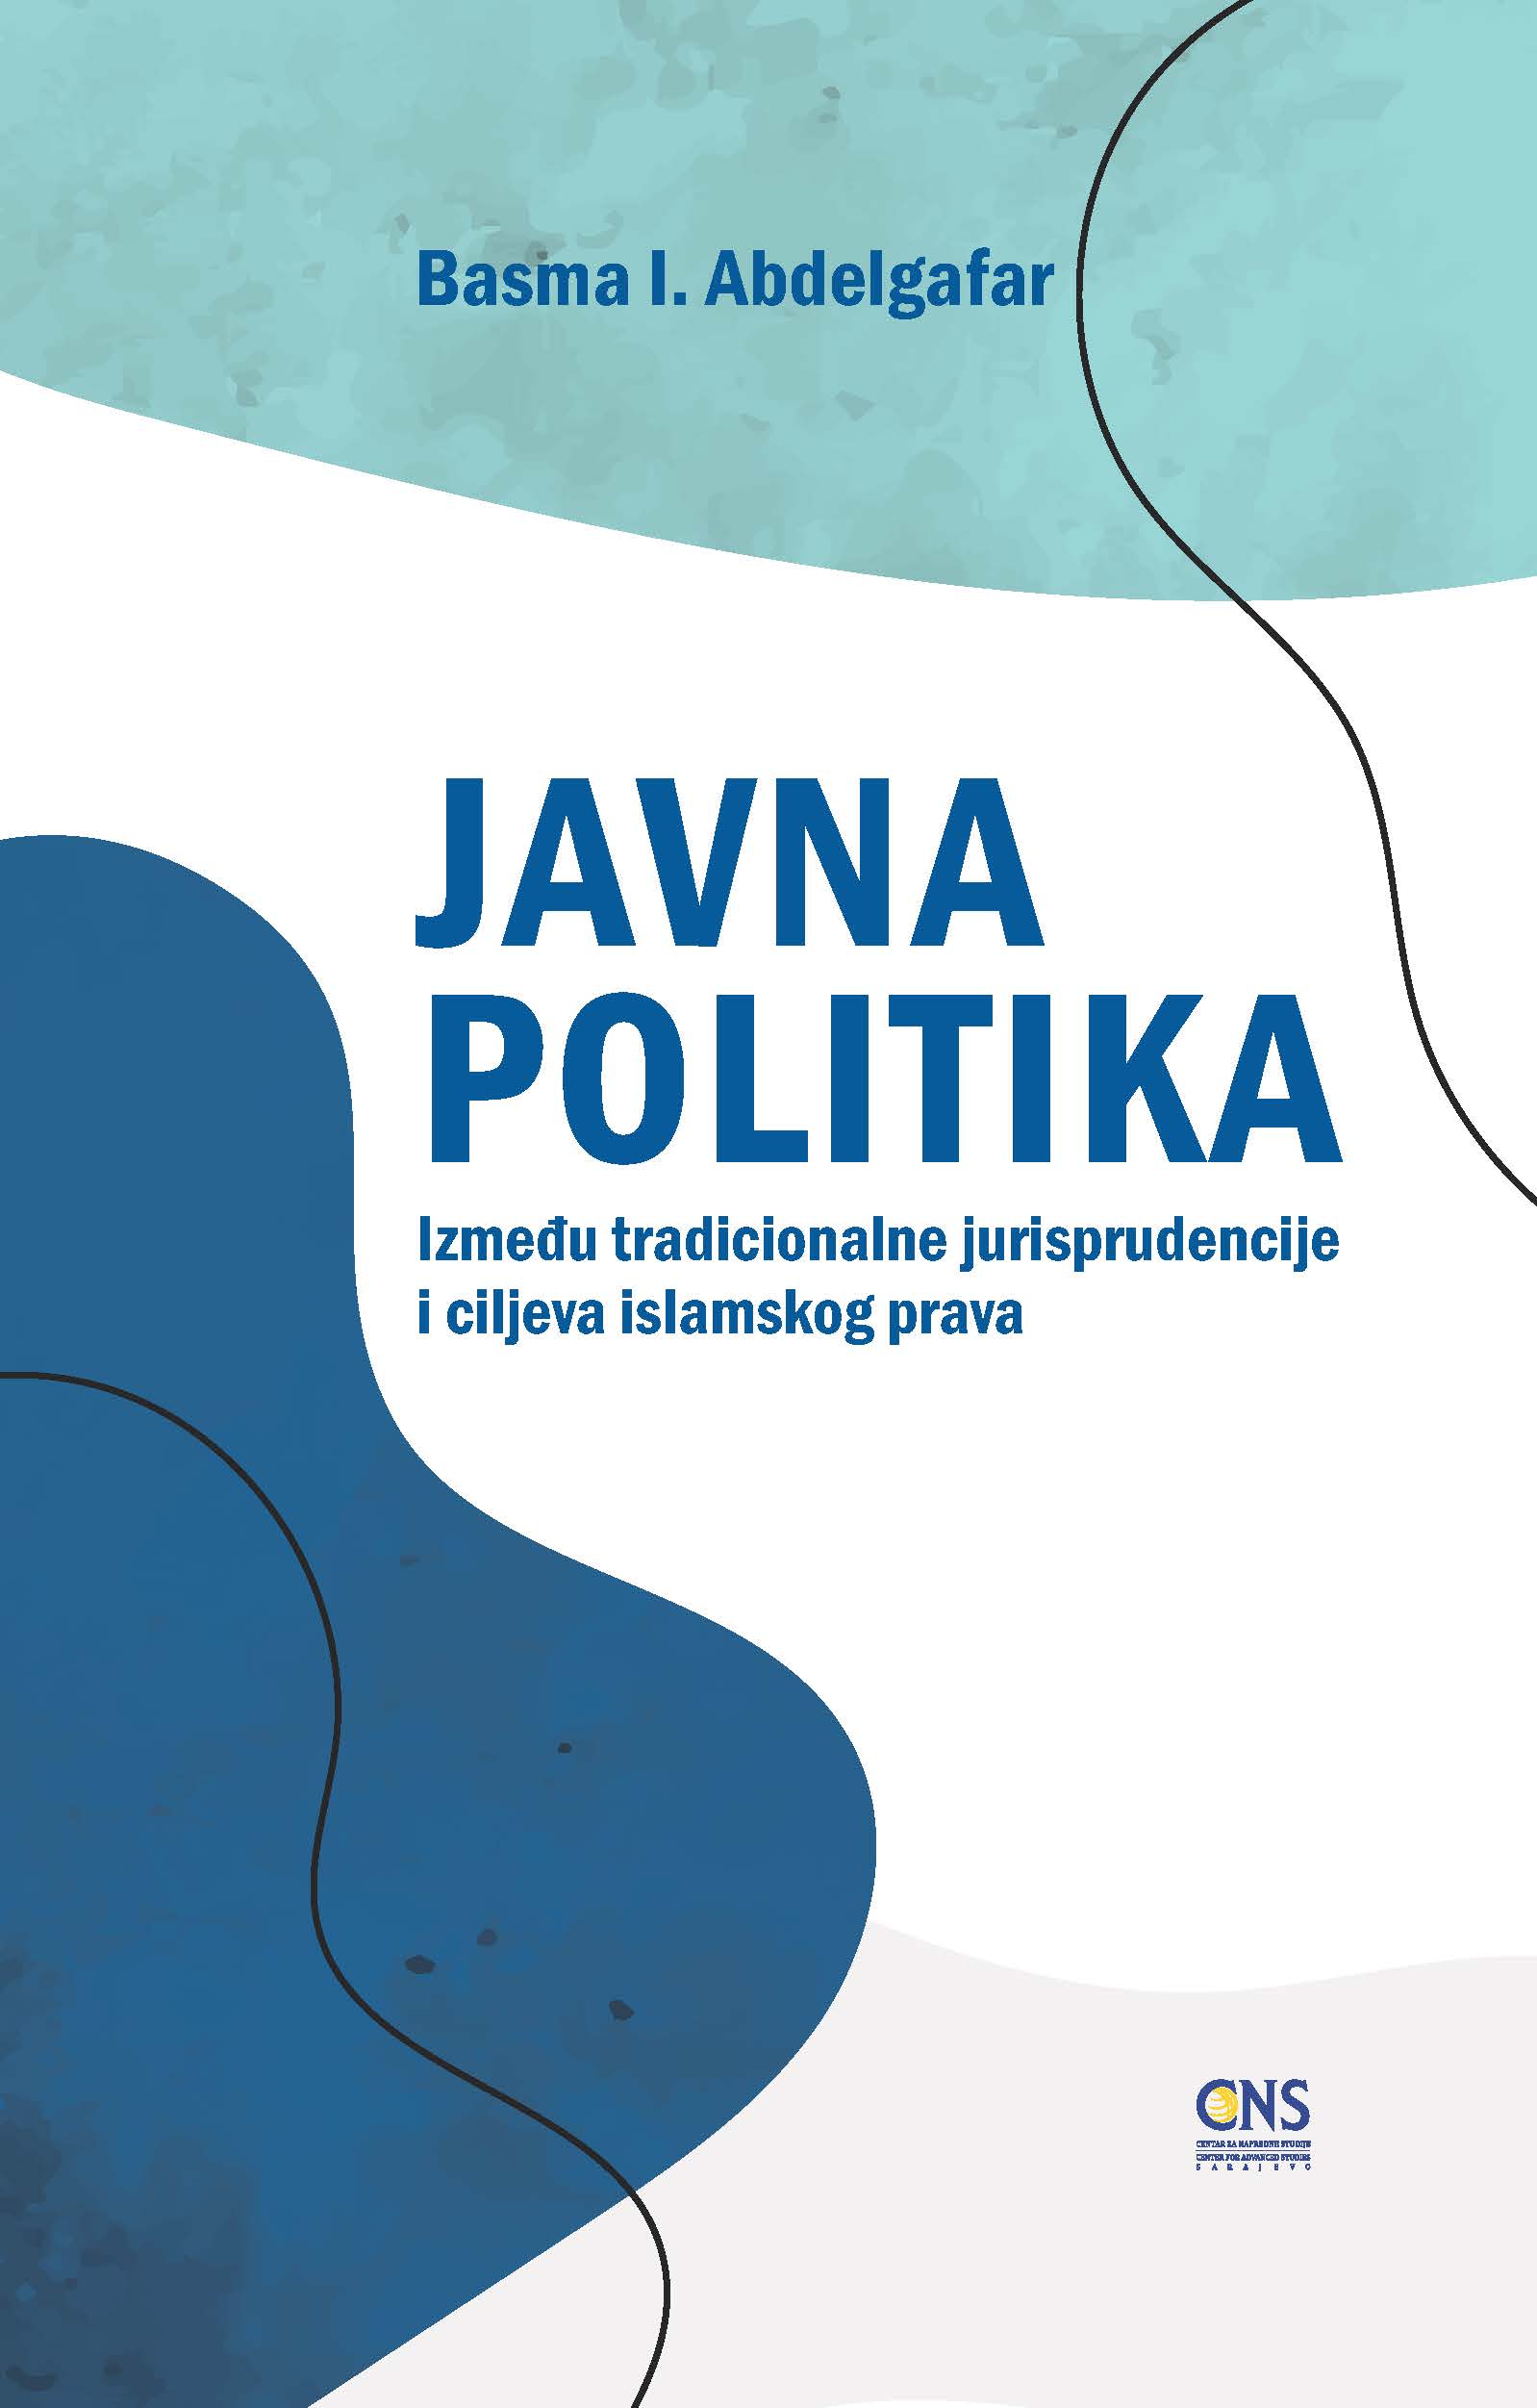 Public Policy Beyond Traditional Jurisprudence – Bosnian